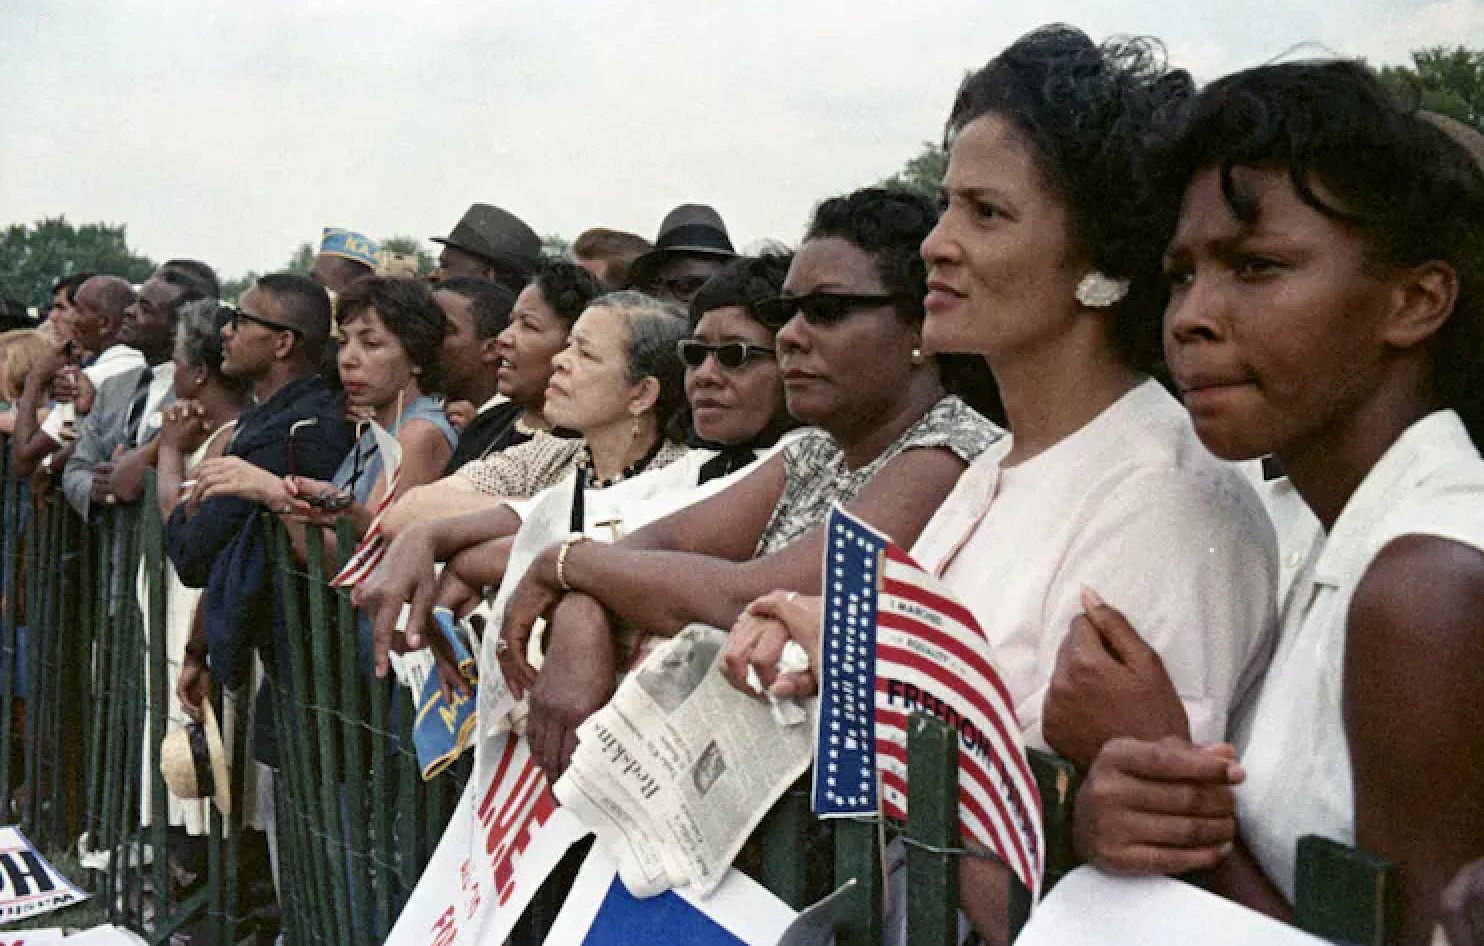 Women listen during the March on Washington on Aug. 28, 1963.